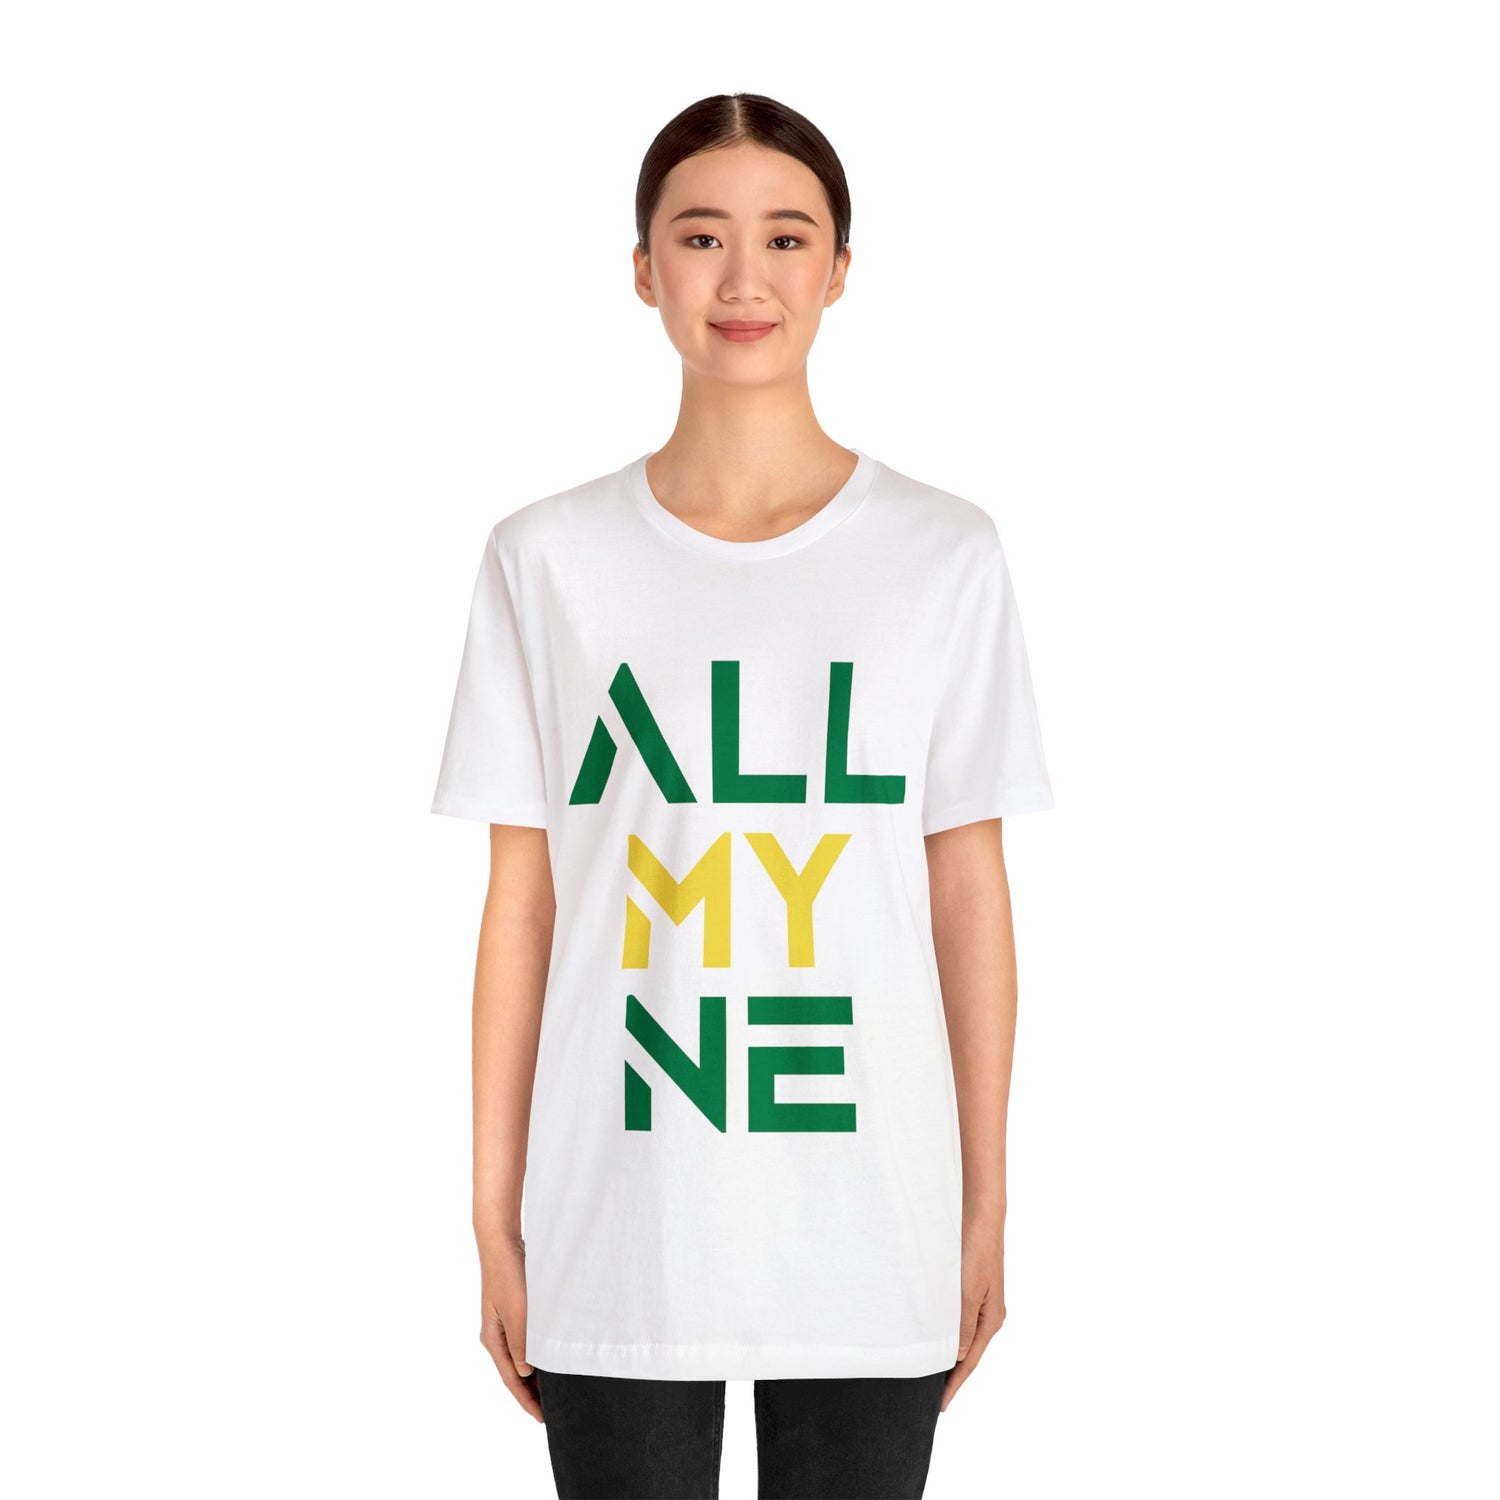 T-shirt ALLMYNE vert/jaune